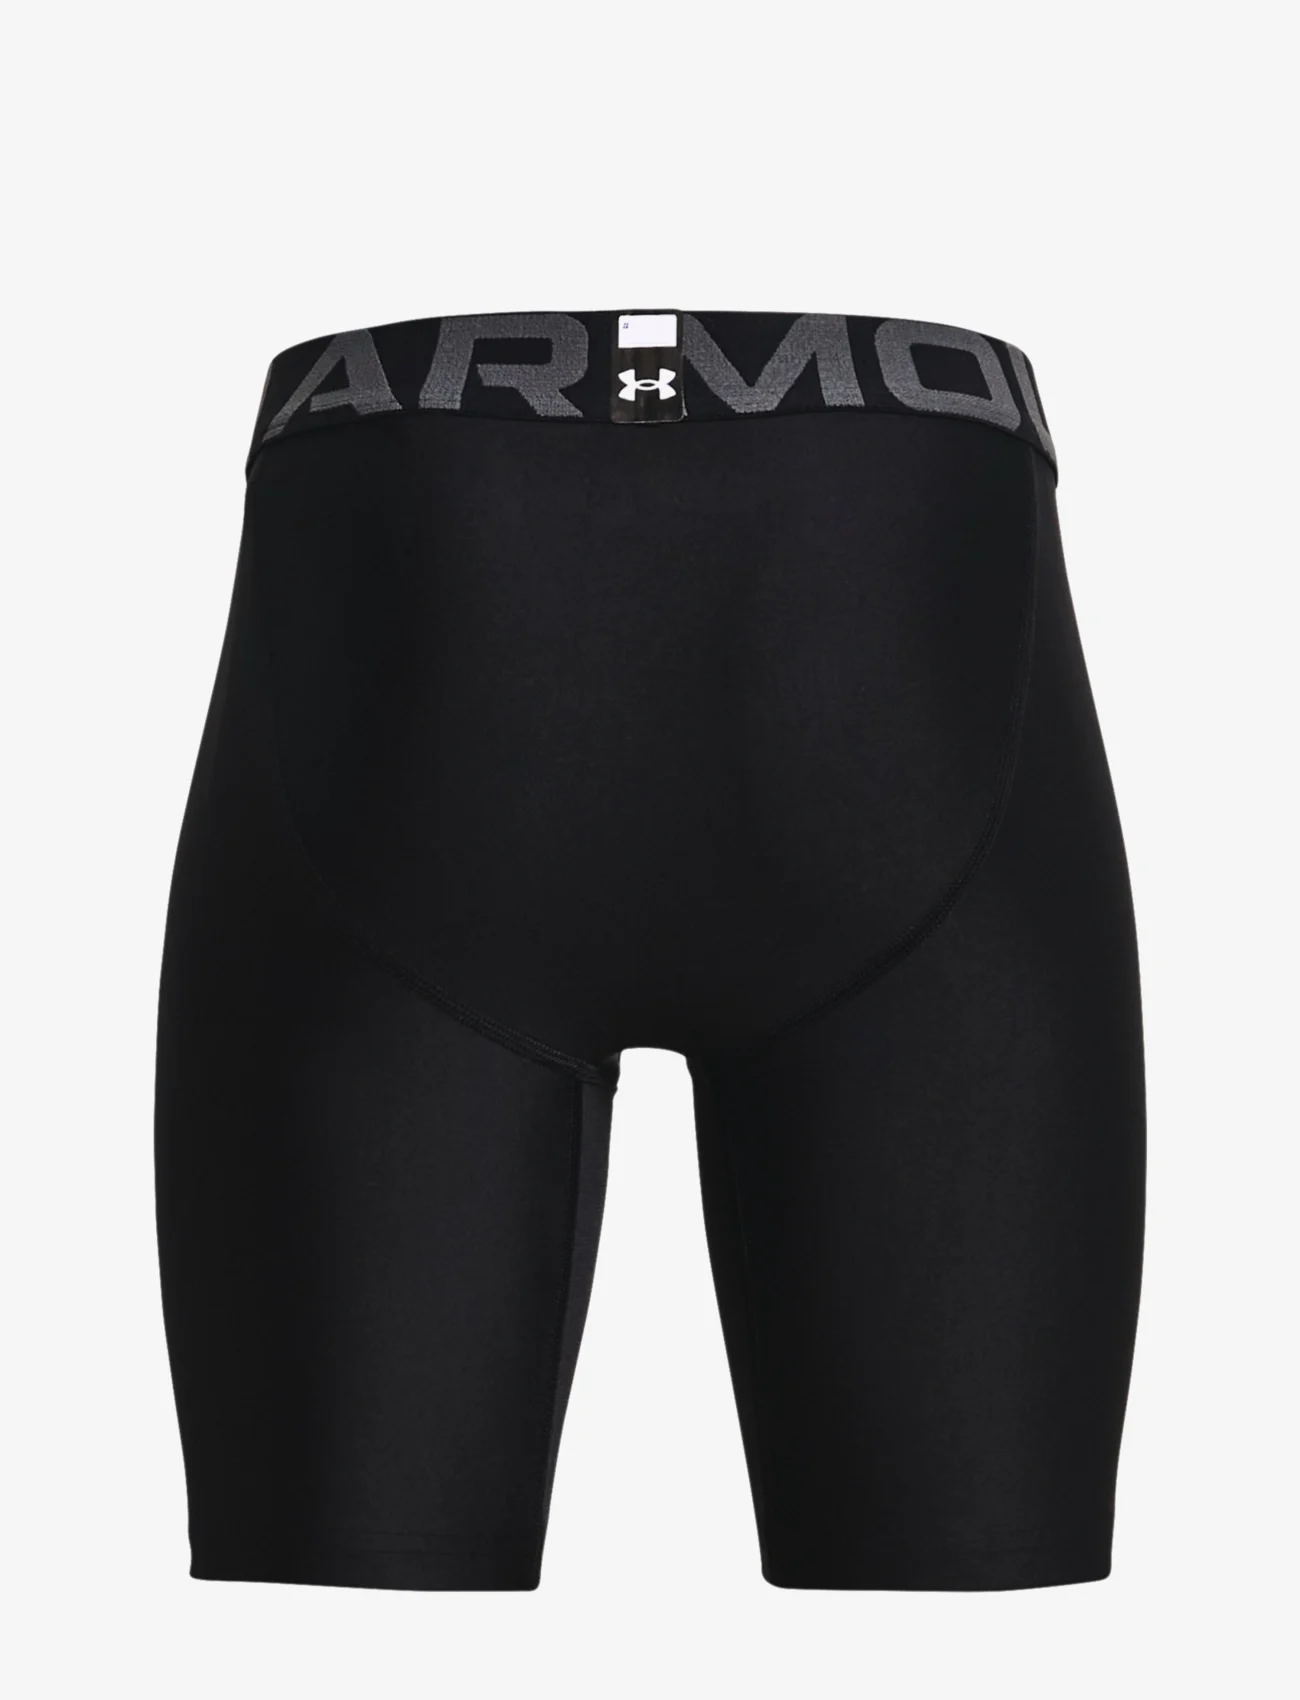 Under Armour - UA HG Armour Shorts - sport shorts - black - 1